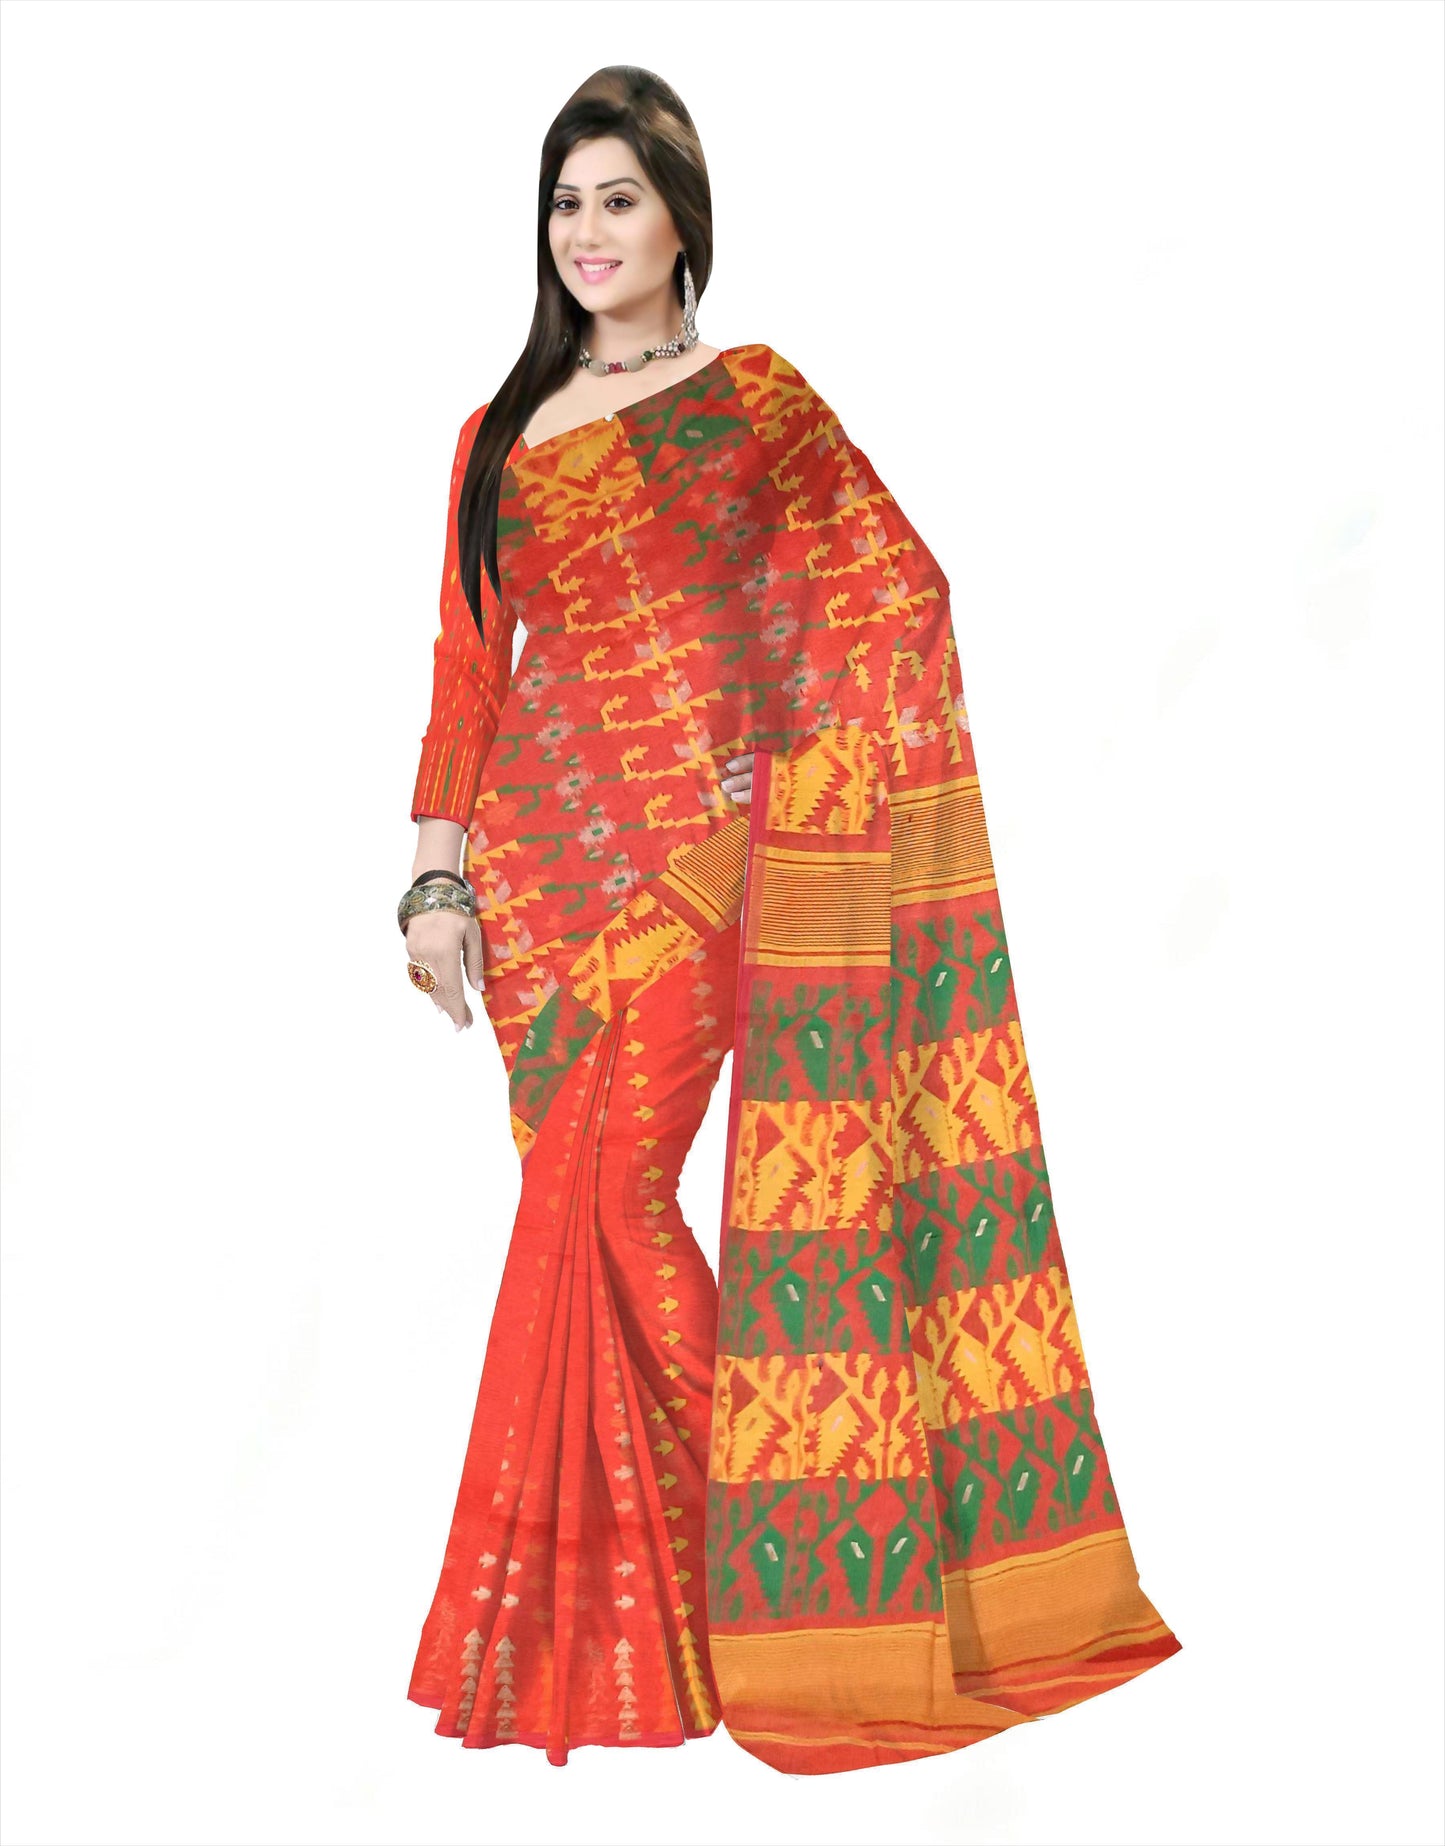 Pradip Fabrics Ethnic Women's Cotton Tant Gap Jamdani Orange Color Saree